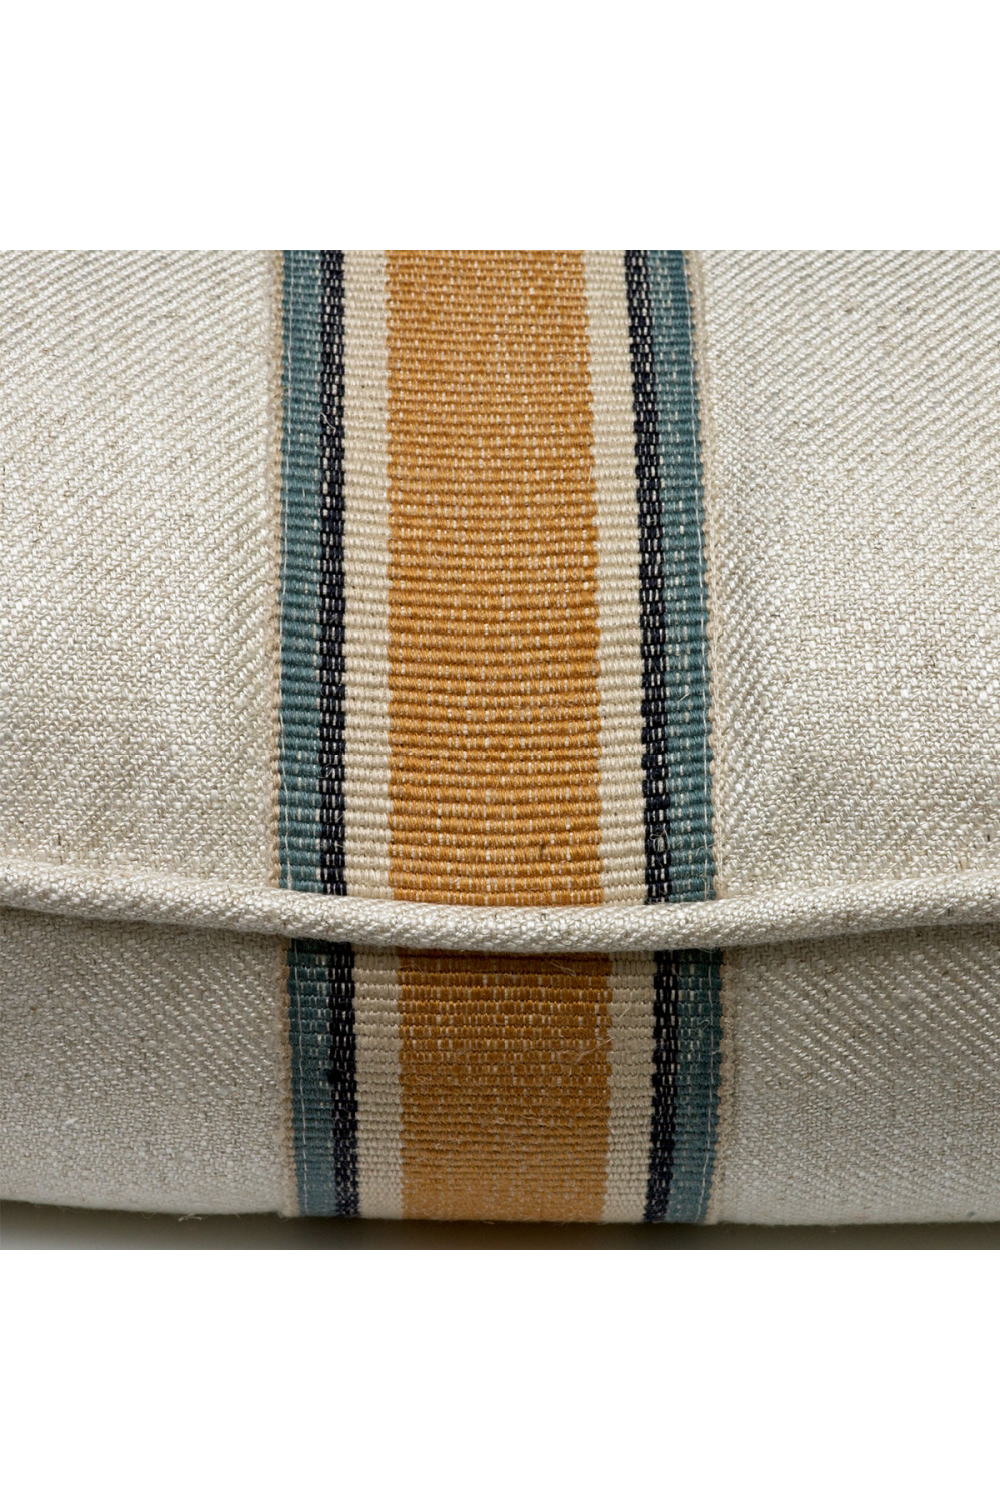 Woven Medal Striped Linen Cushion | Andrew Martin Hedgerow | OROA